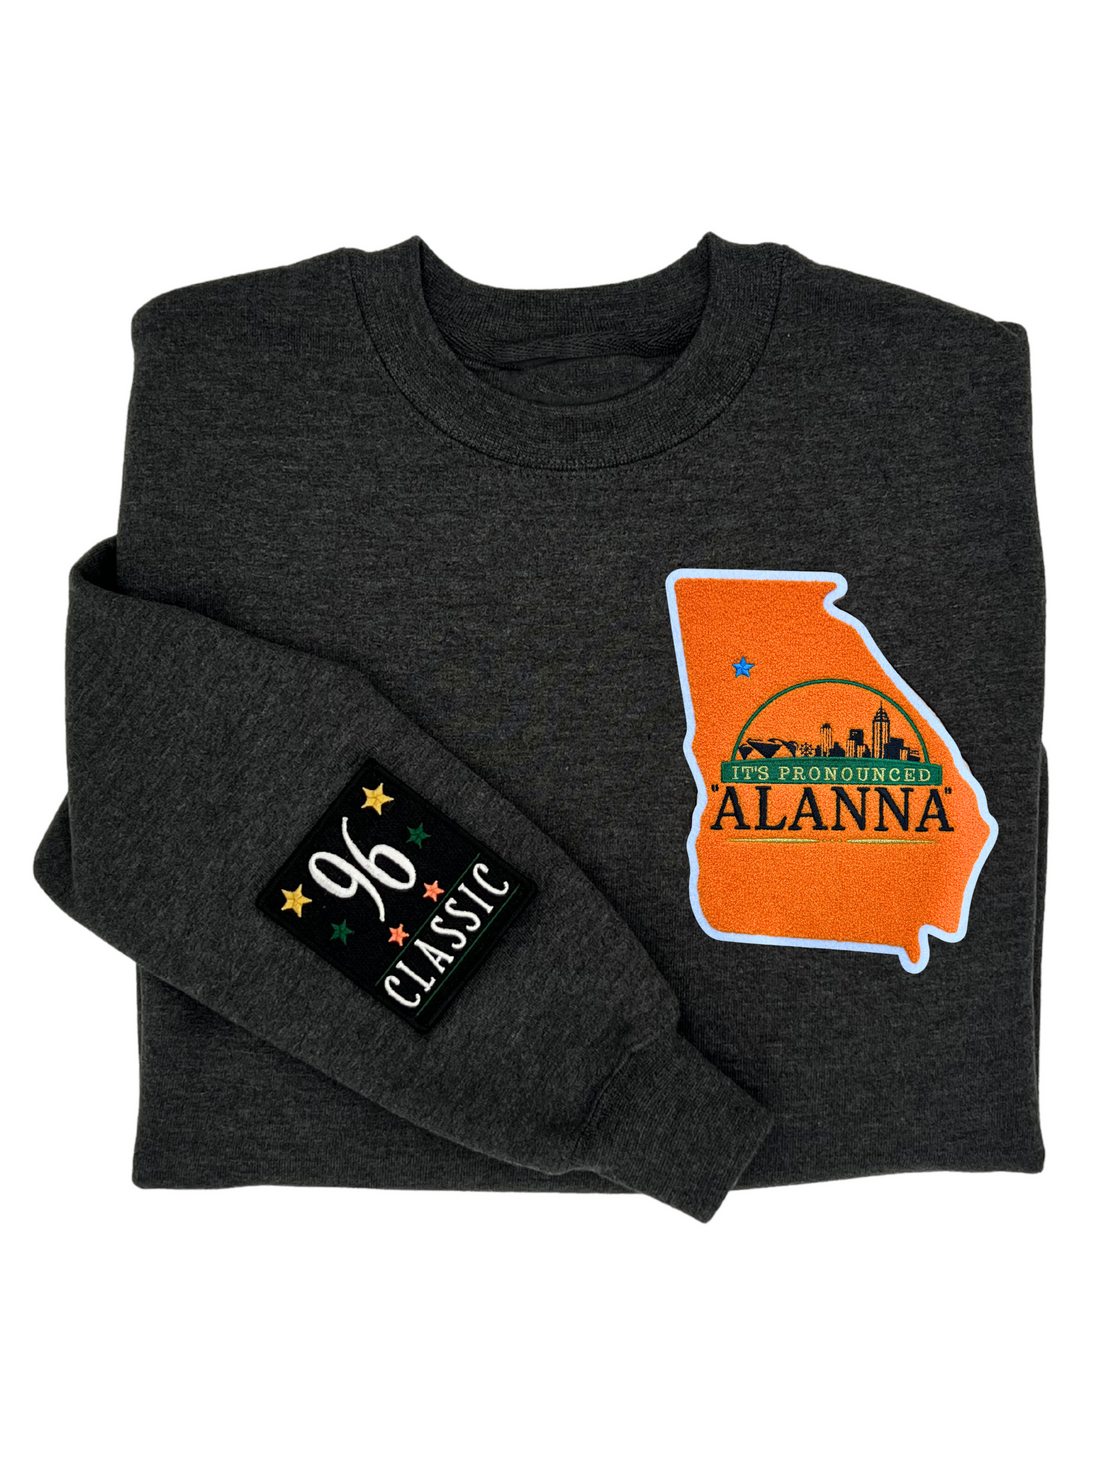 MiddleGrounds-Atlanta-apparel-and-clothing-1996-Classic-Georgia-state-outline-crewneck-urban-branded-merch-featuring-Atlanta-skyline-design